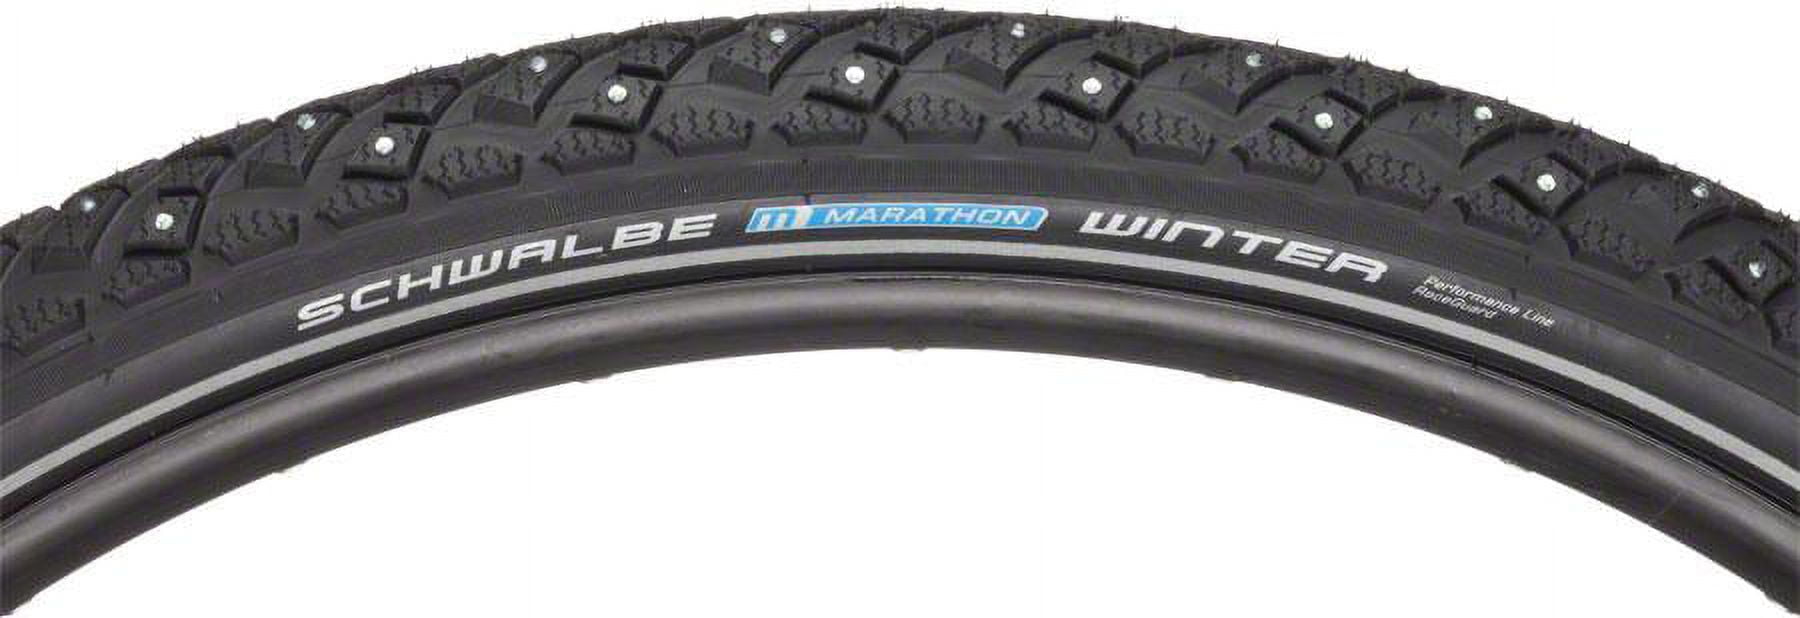 Schwalbe Marathon Winter Plus Bike Tire: 700 x 40c, Wire Bead, – Bicycle  Warehouse